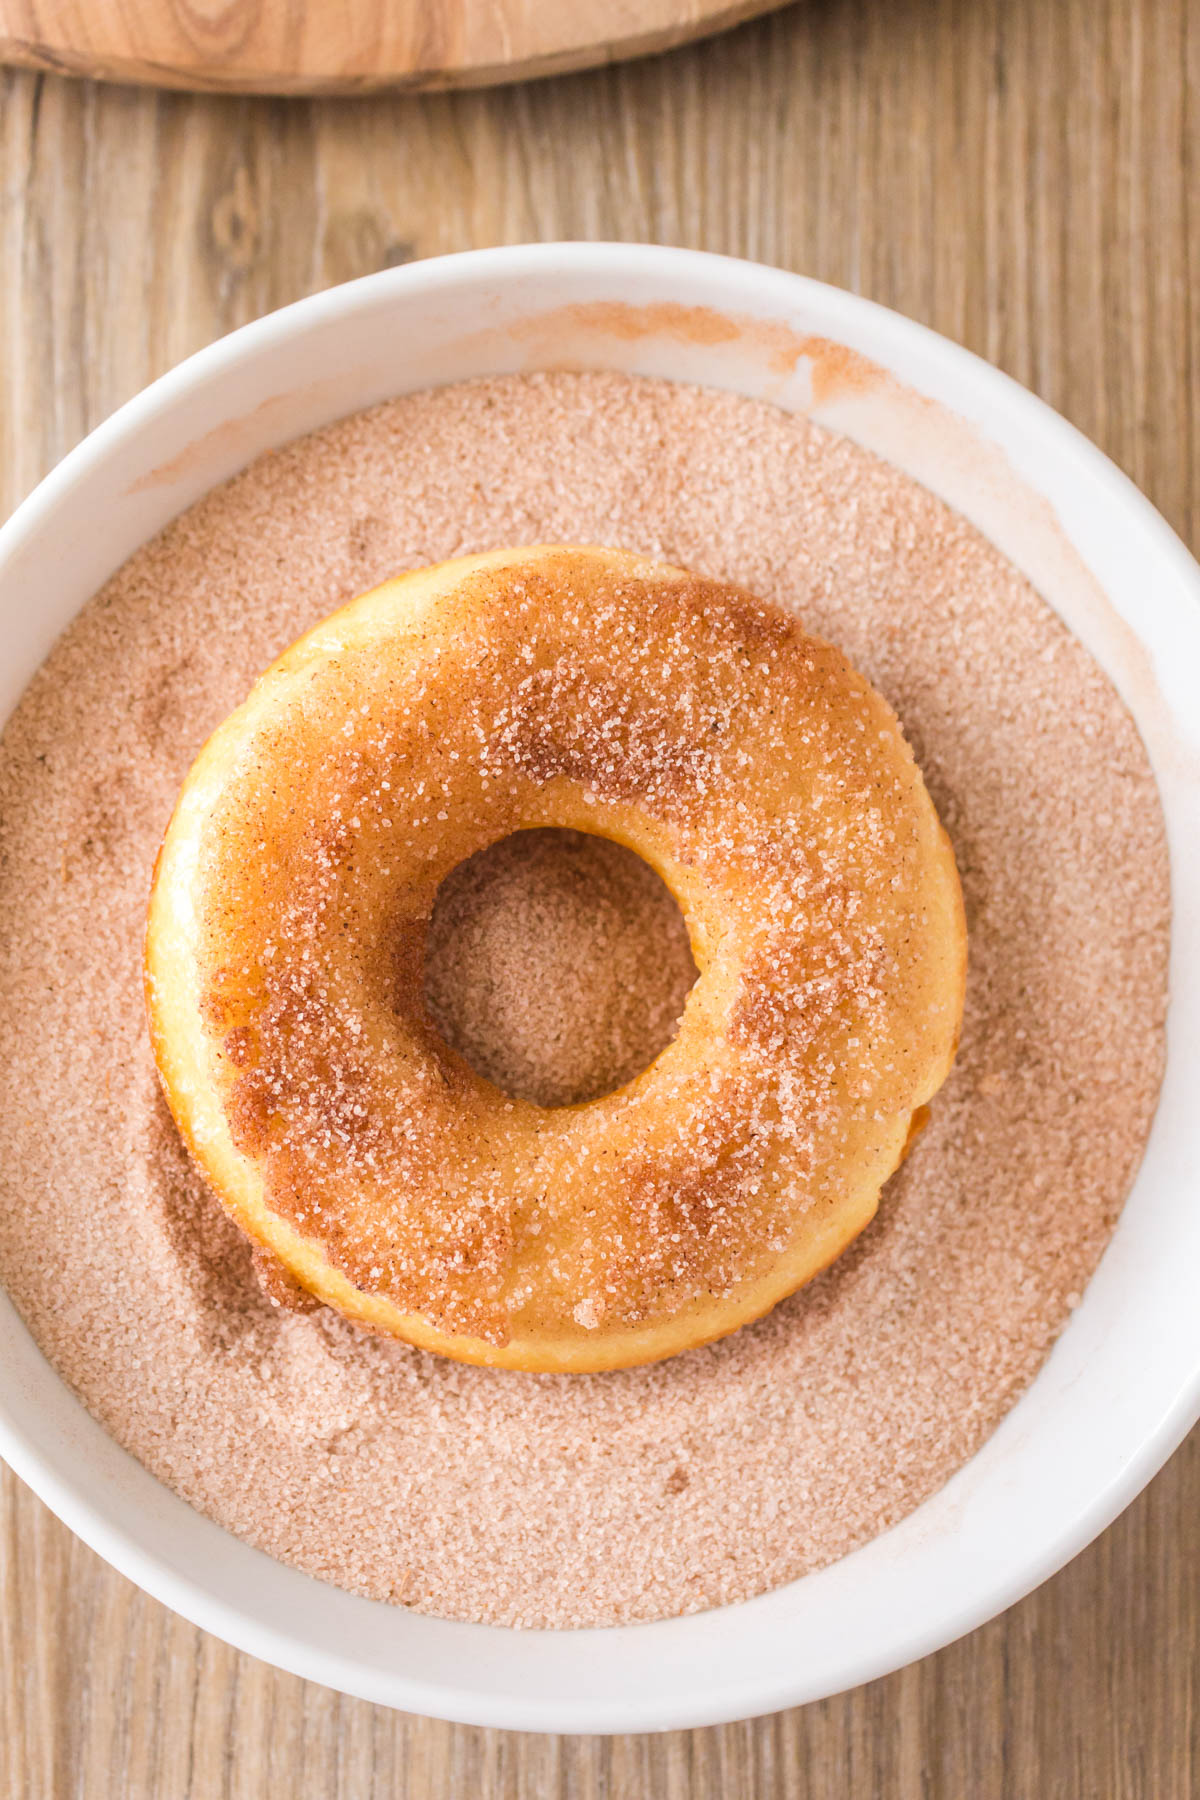 A doughnut sitting in a bowl of cinnamon and sugar mix.